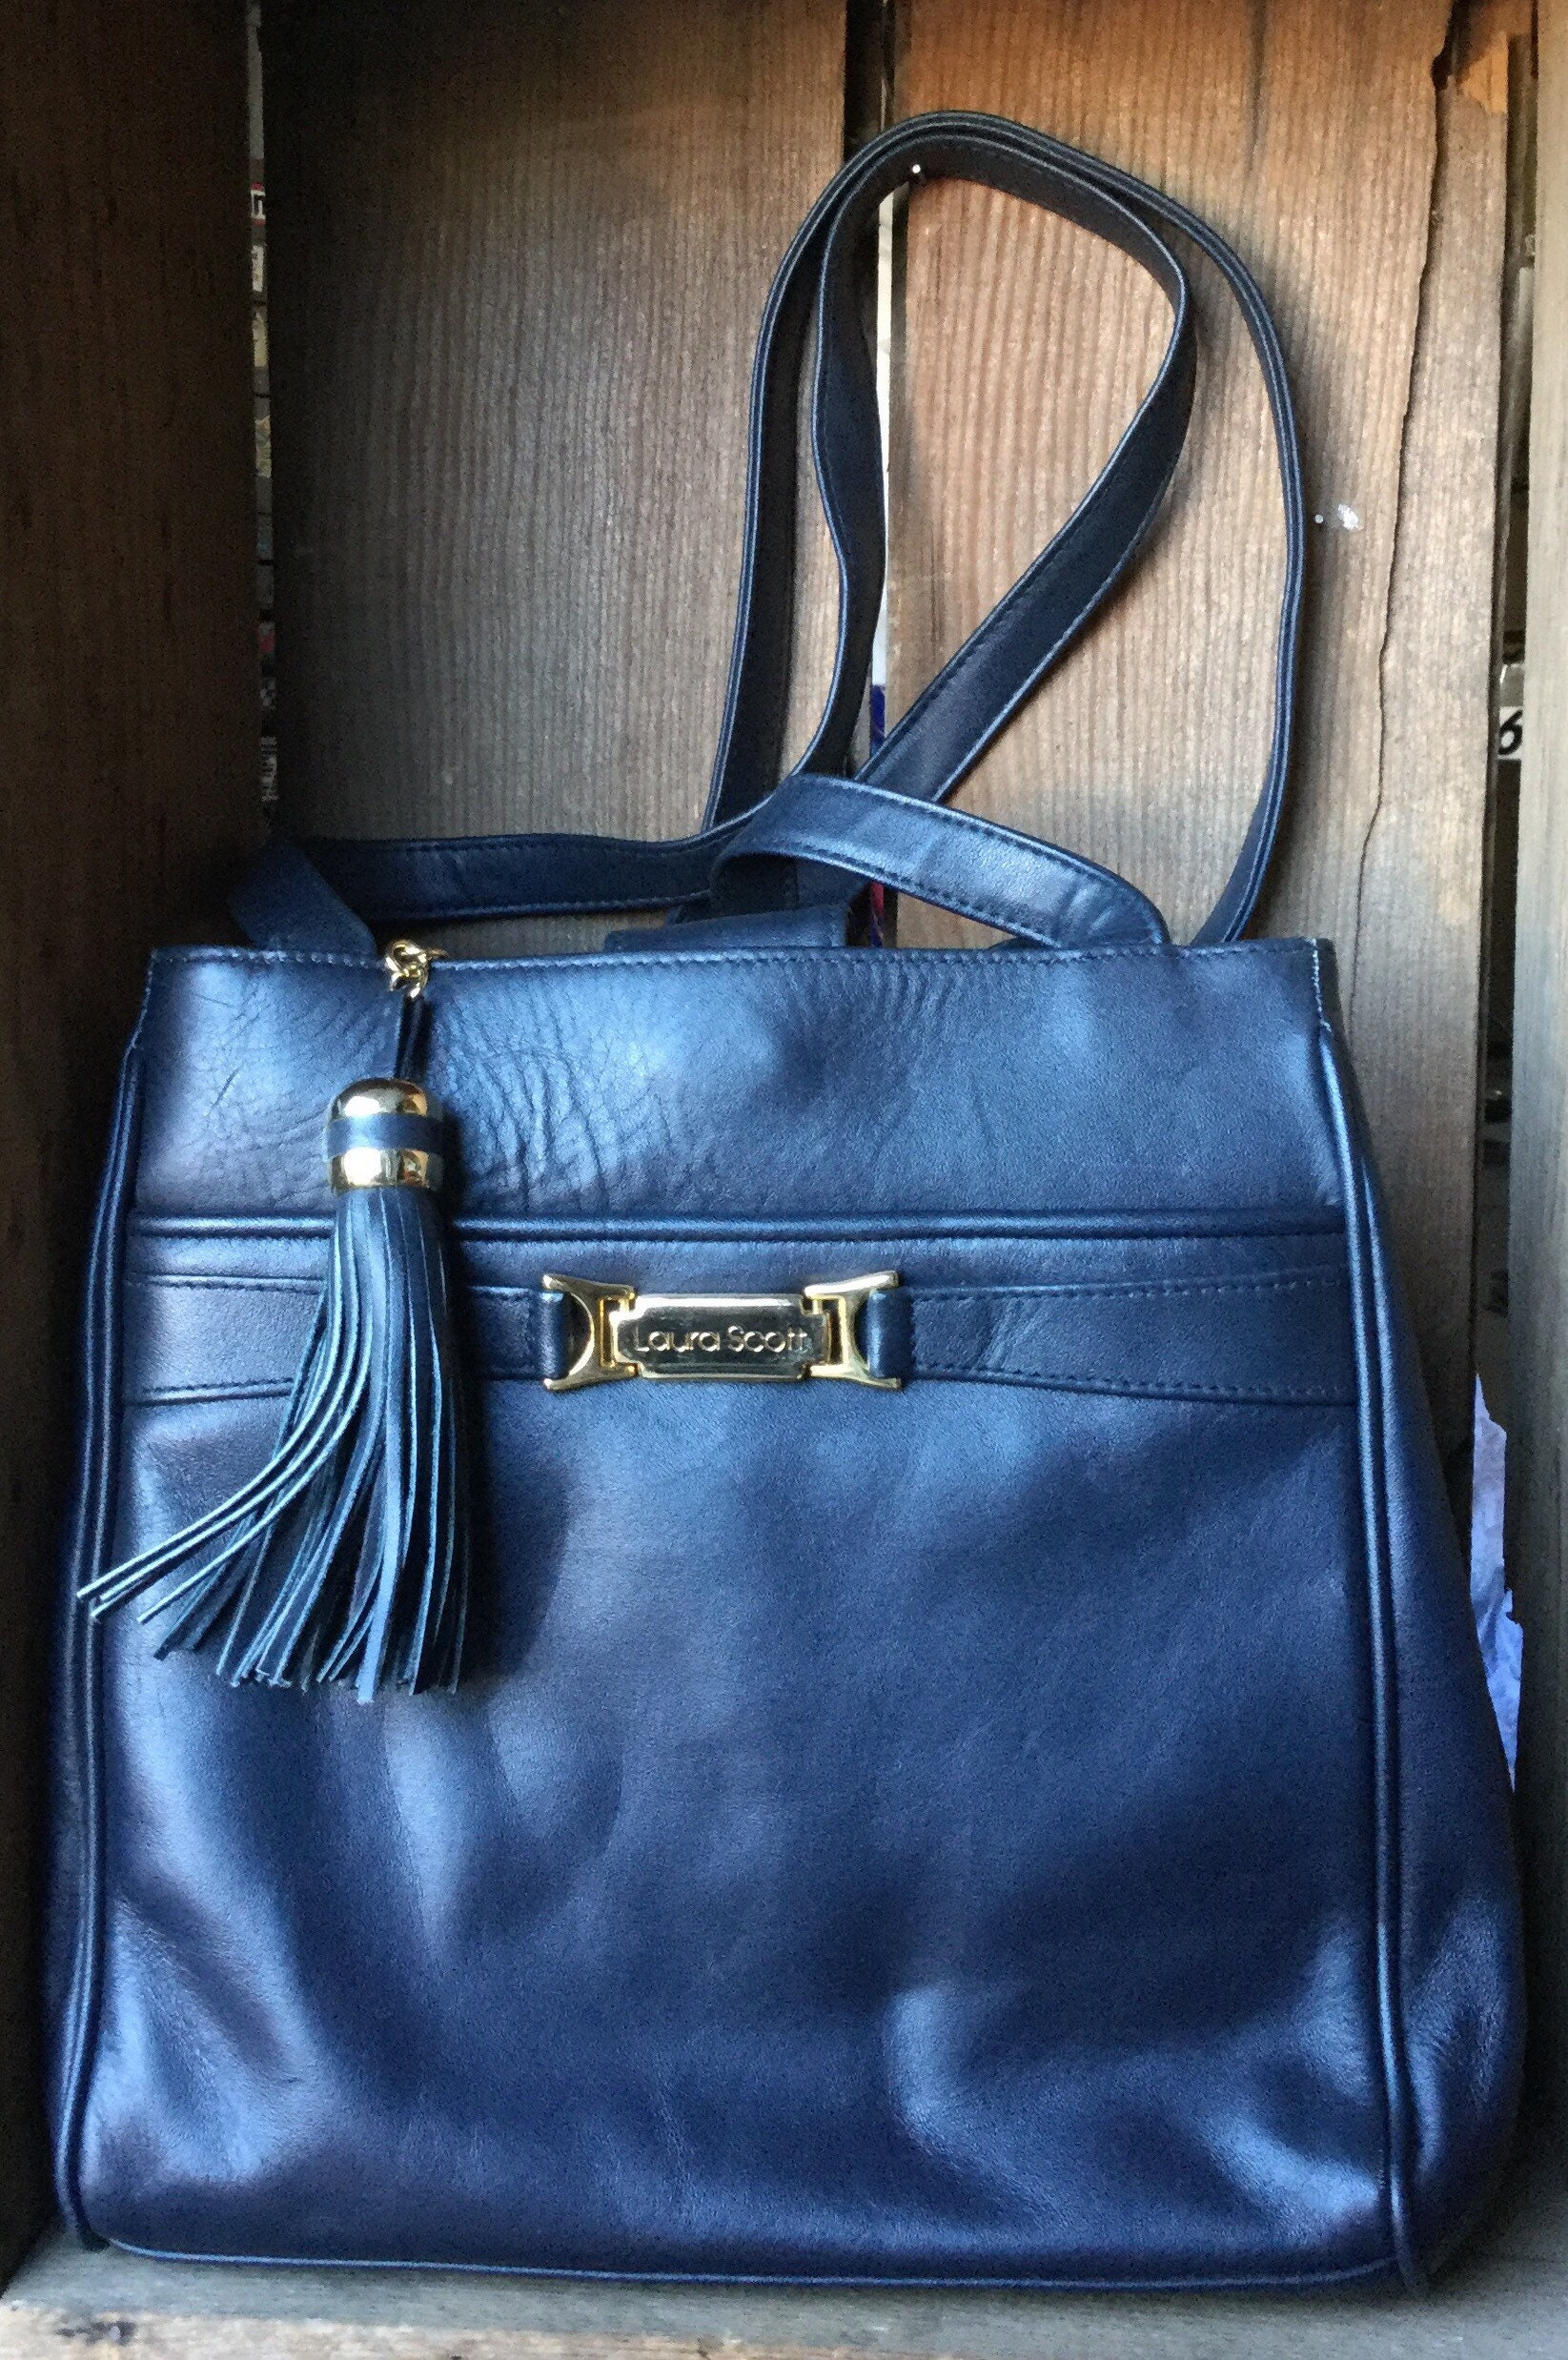 Shop for Heine | Bags & Accessories | Womens | online at Grattan